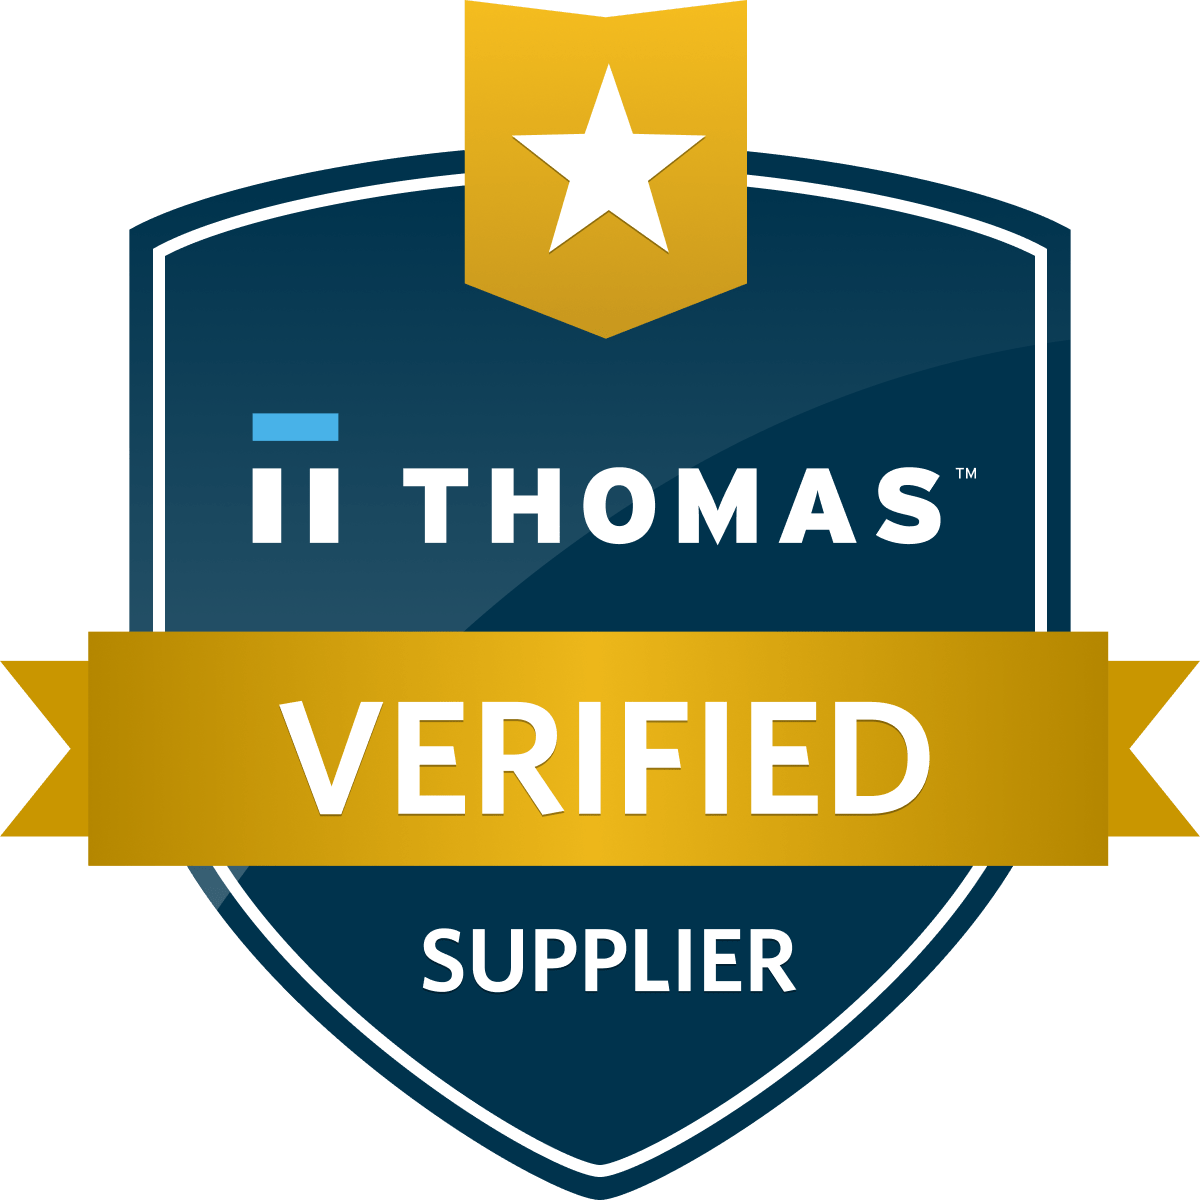 Thomas Verified Supplier Badge & Website